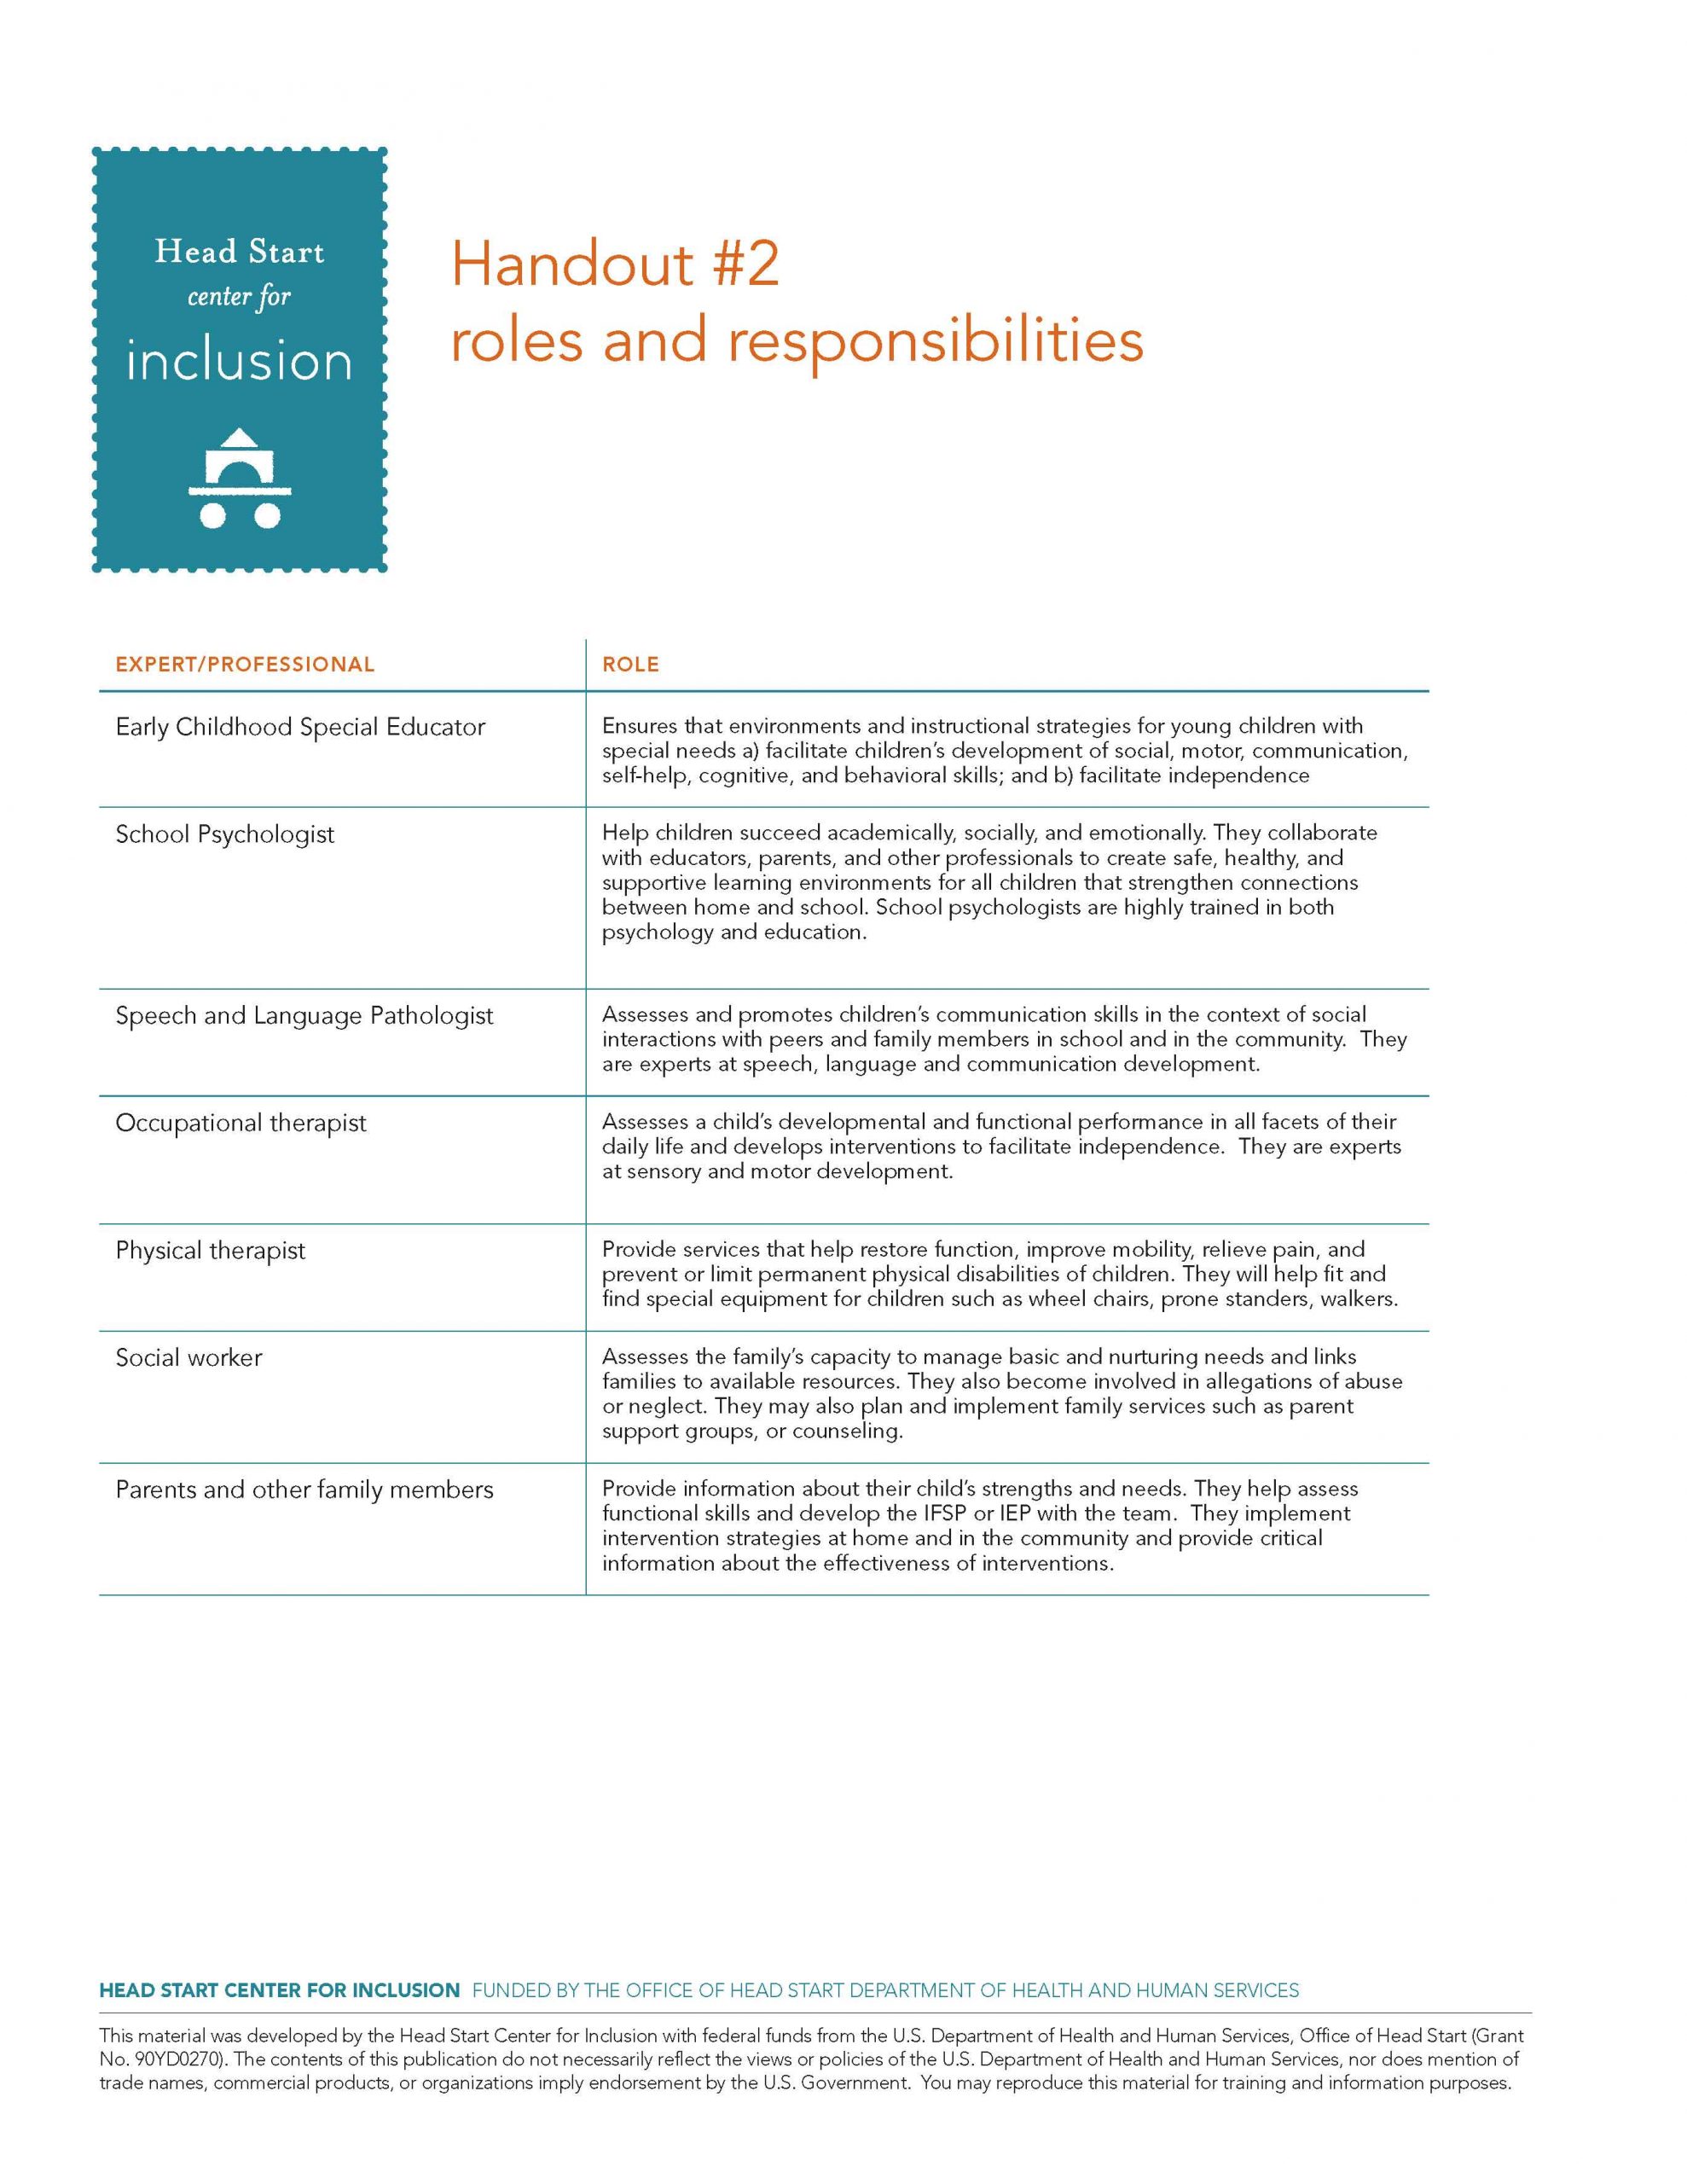 Roles & Responsibilities